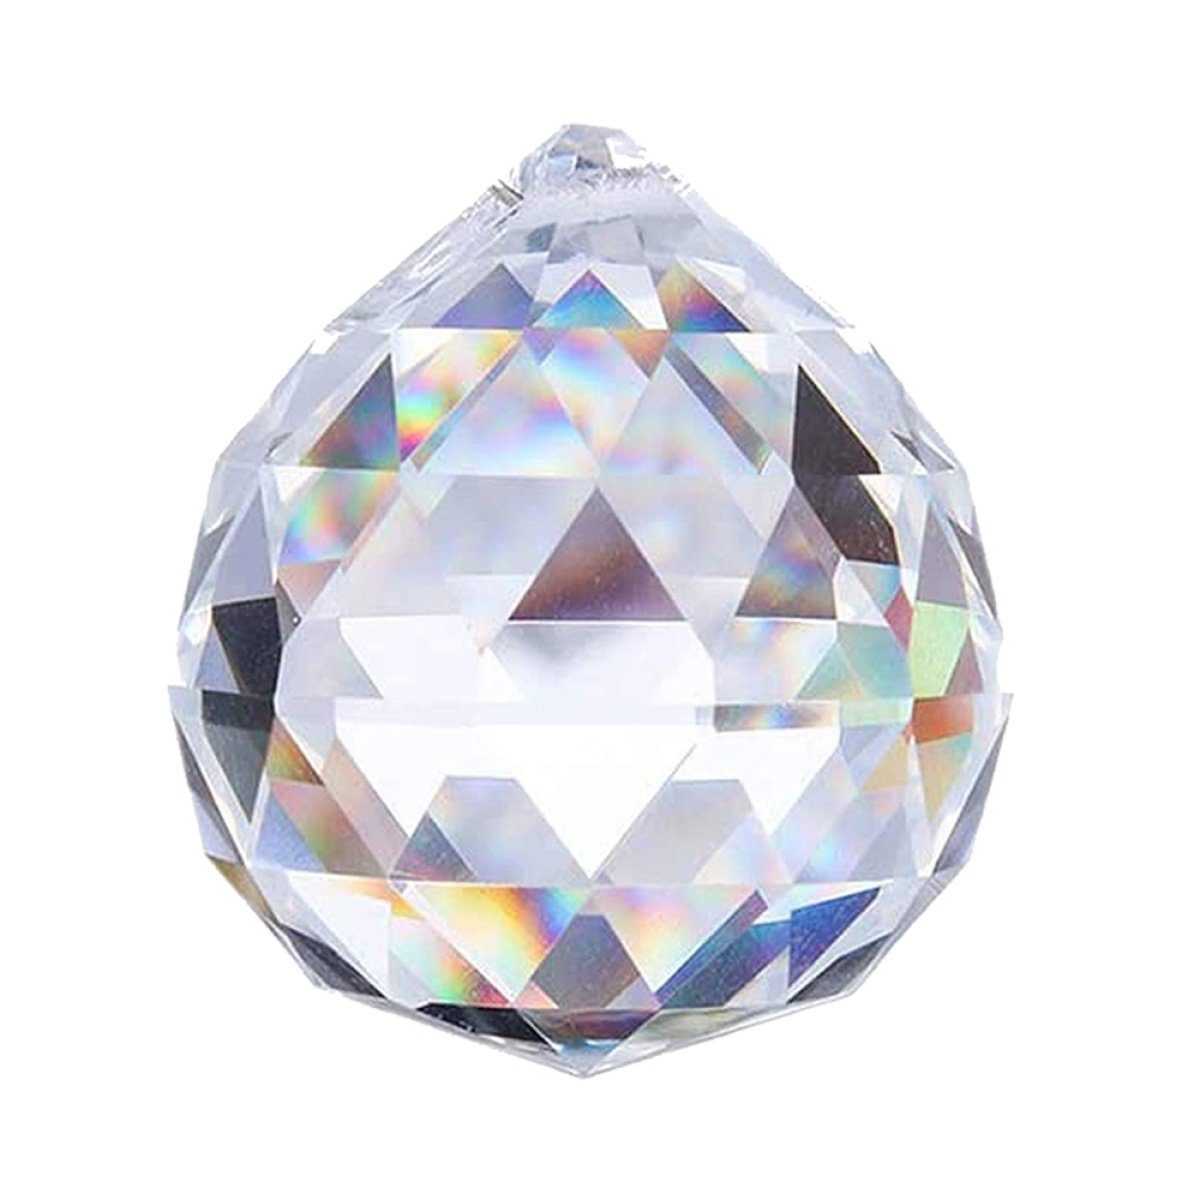 Questive Hängedekoration Klarglas Kristall Kugel Prisma Feng-Shui Lampe hängend